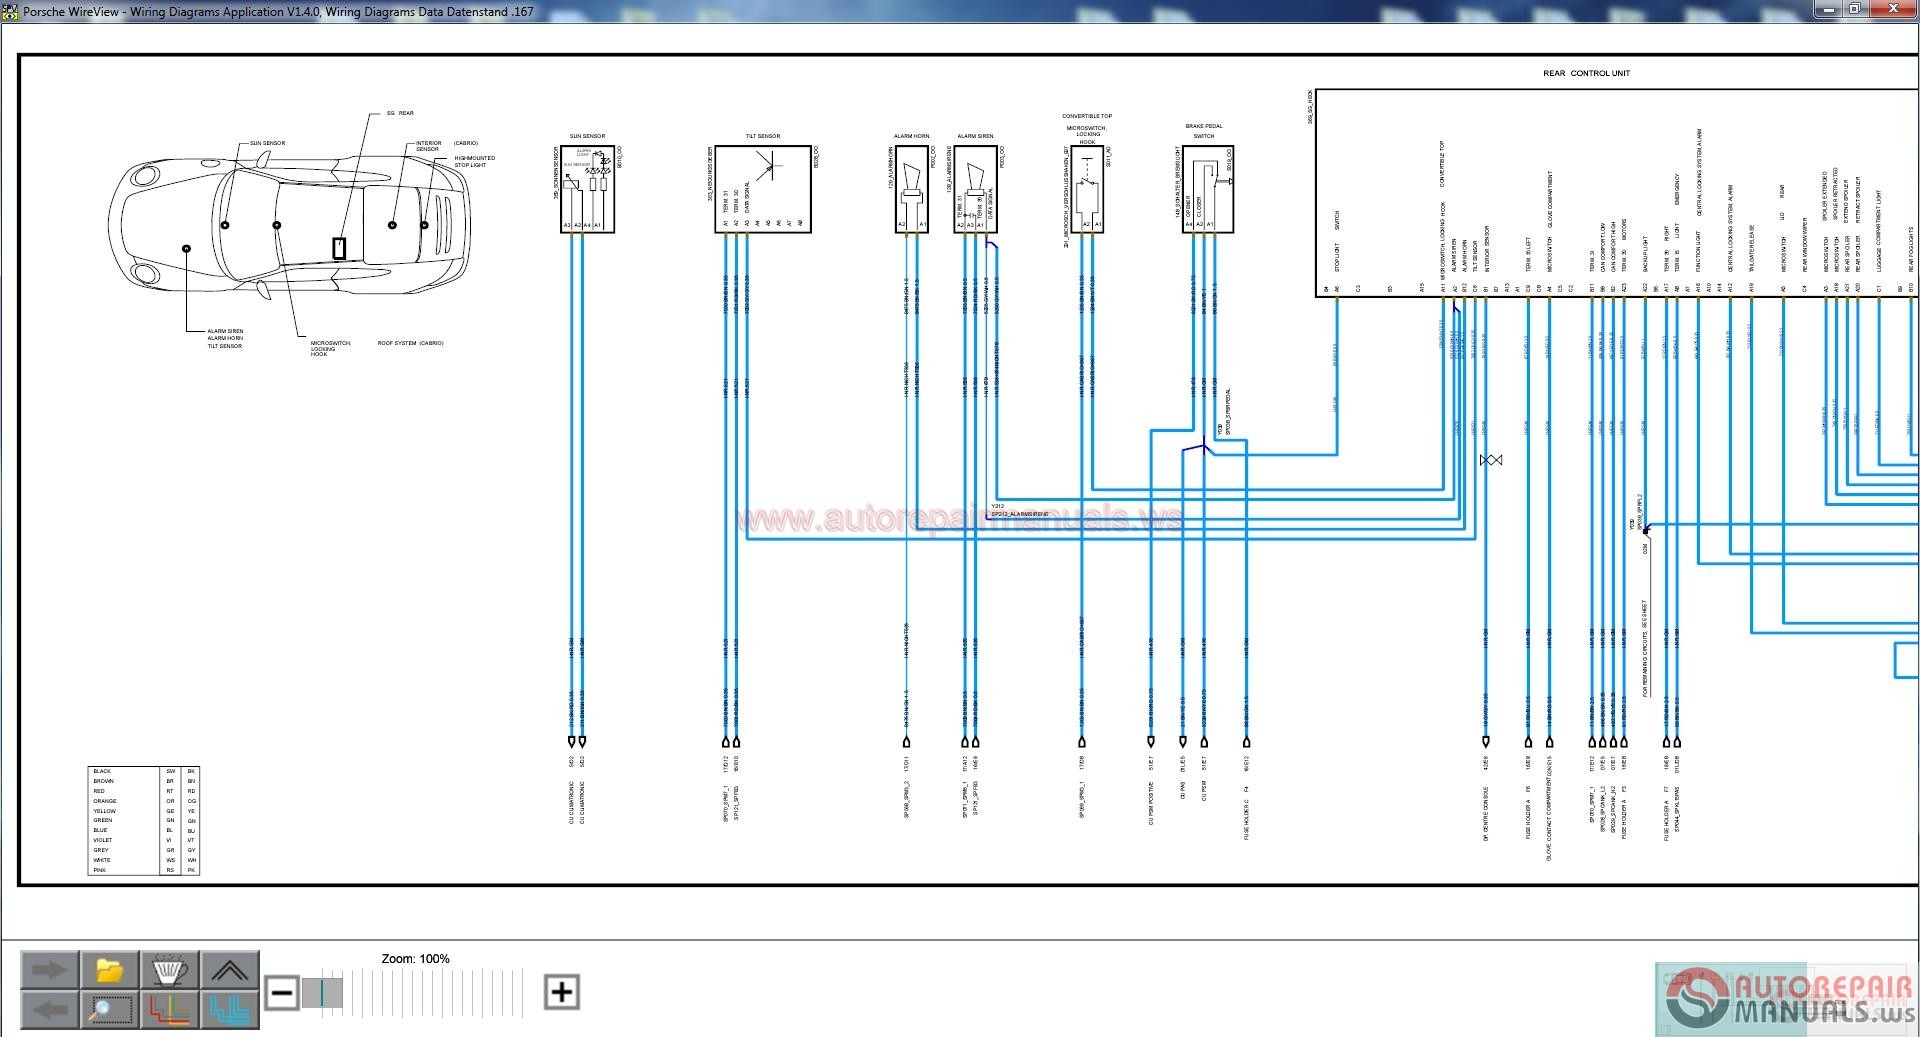 Genie Excelerator Wiring Diagram from img.autorepairmanuals.ws